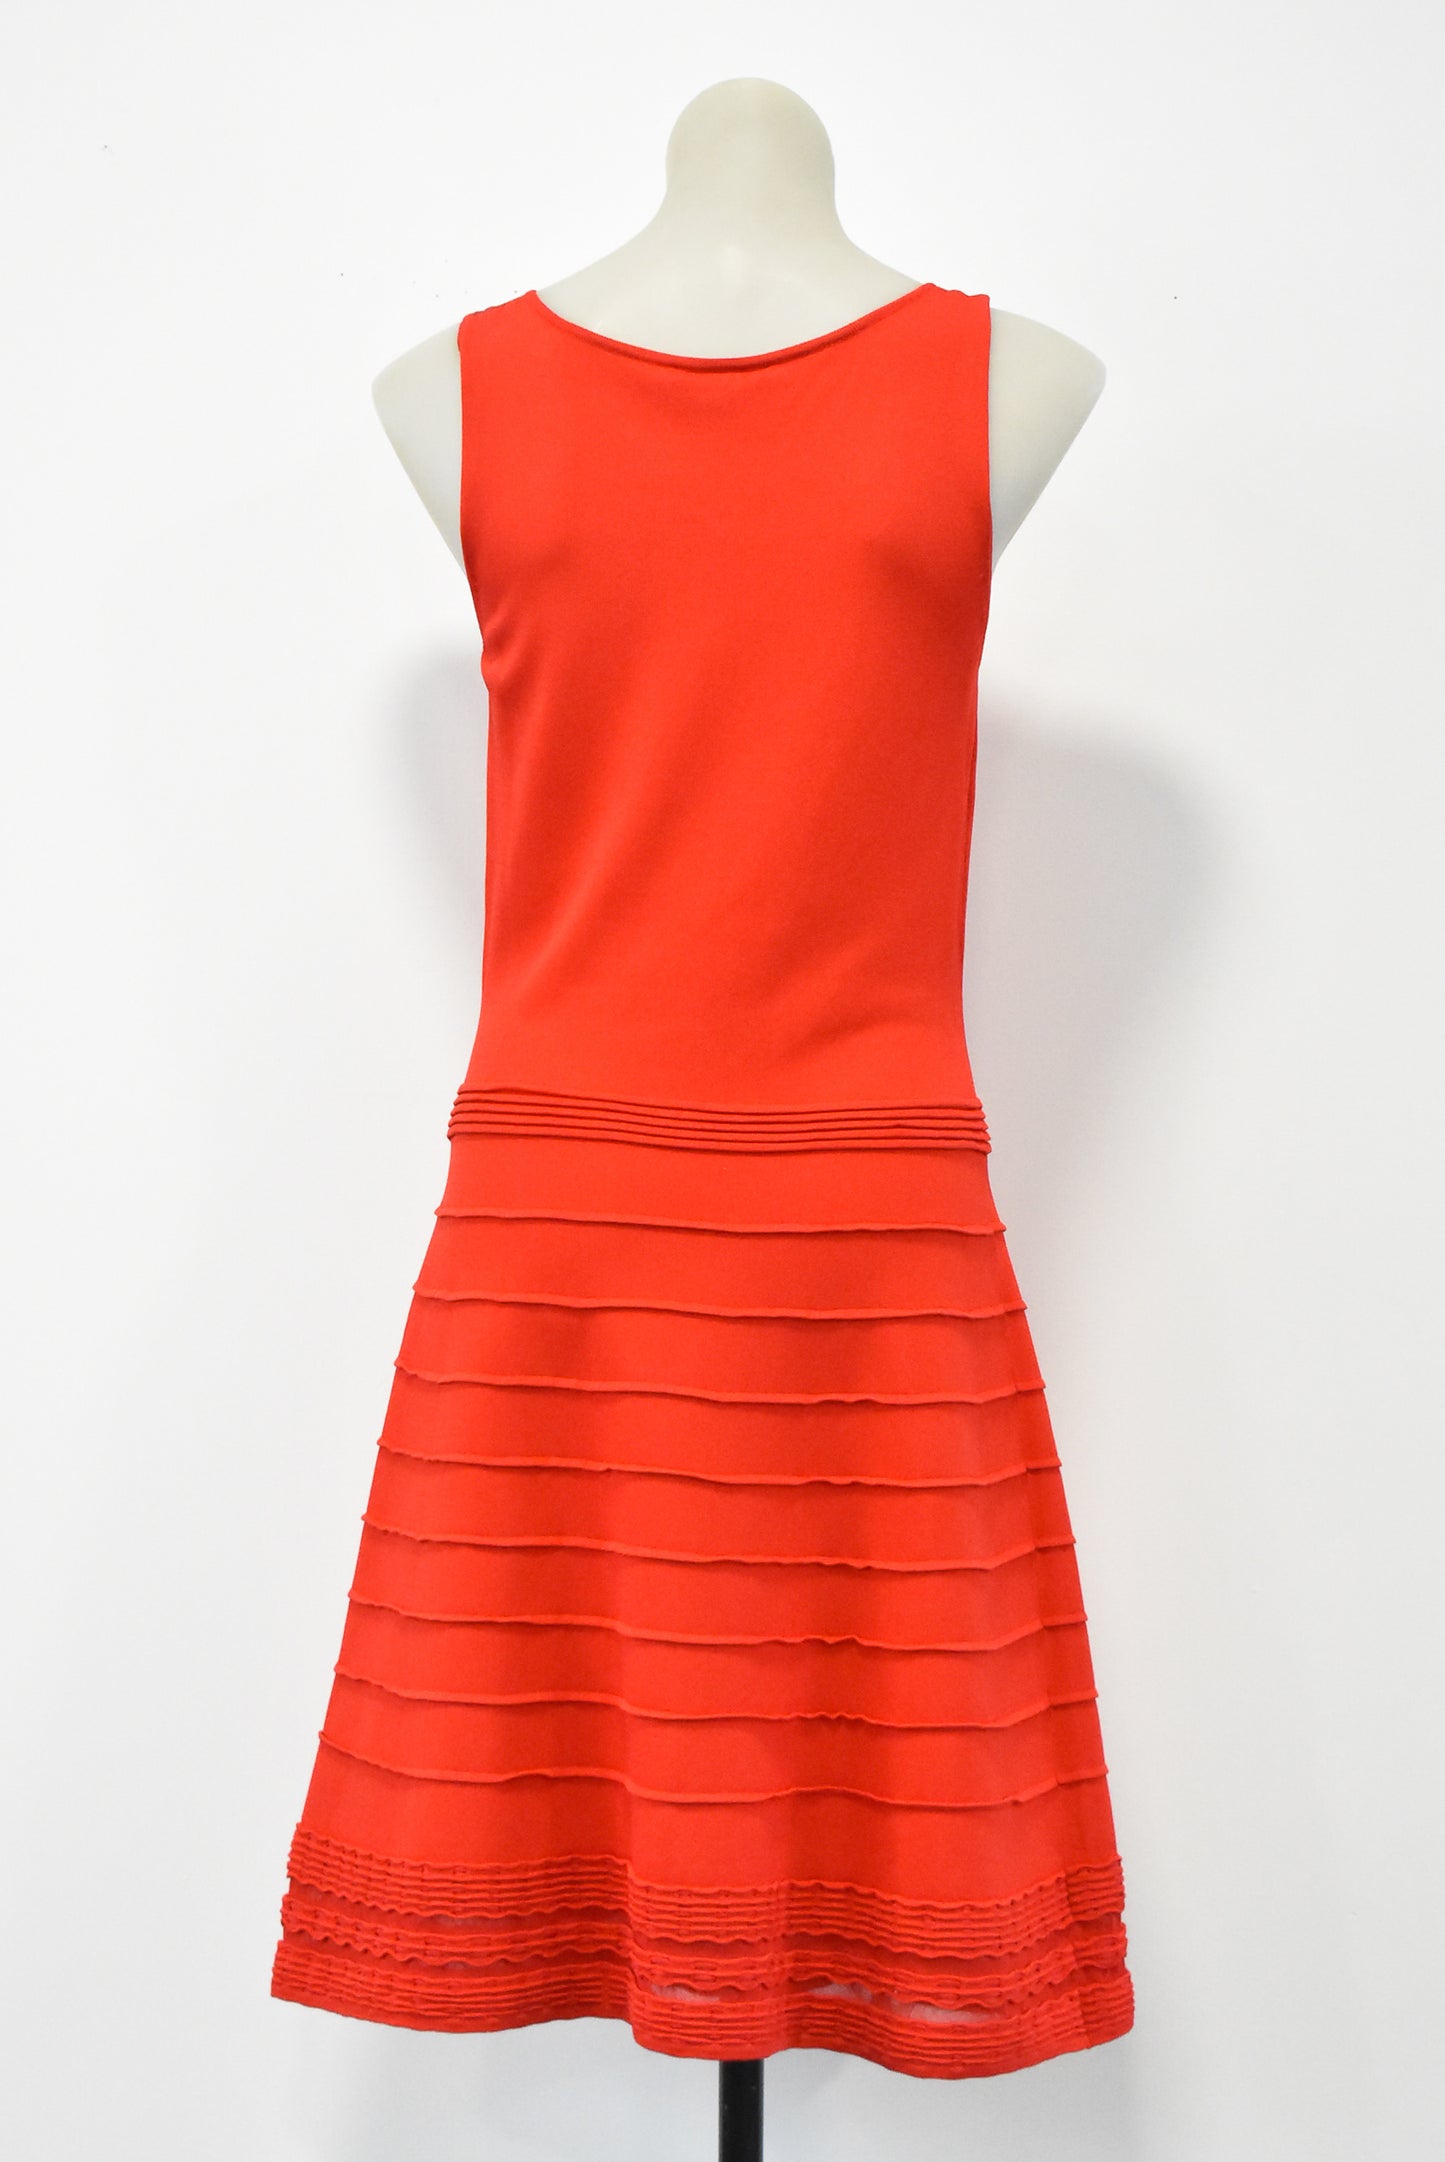 Lauren red knit dress, M